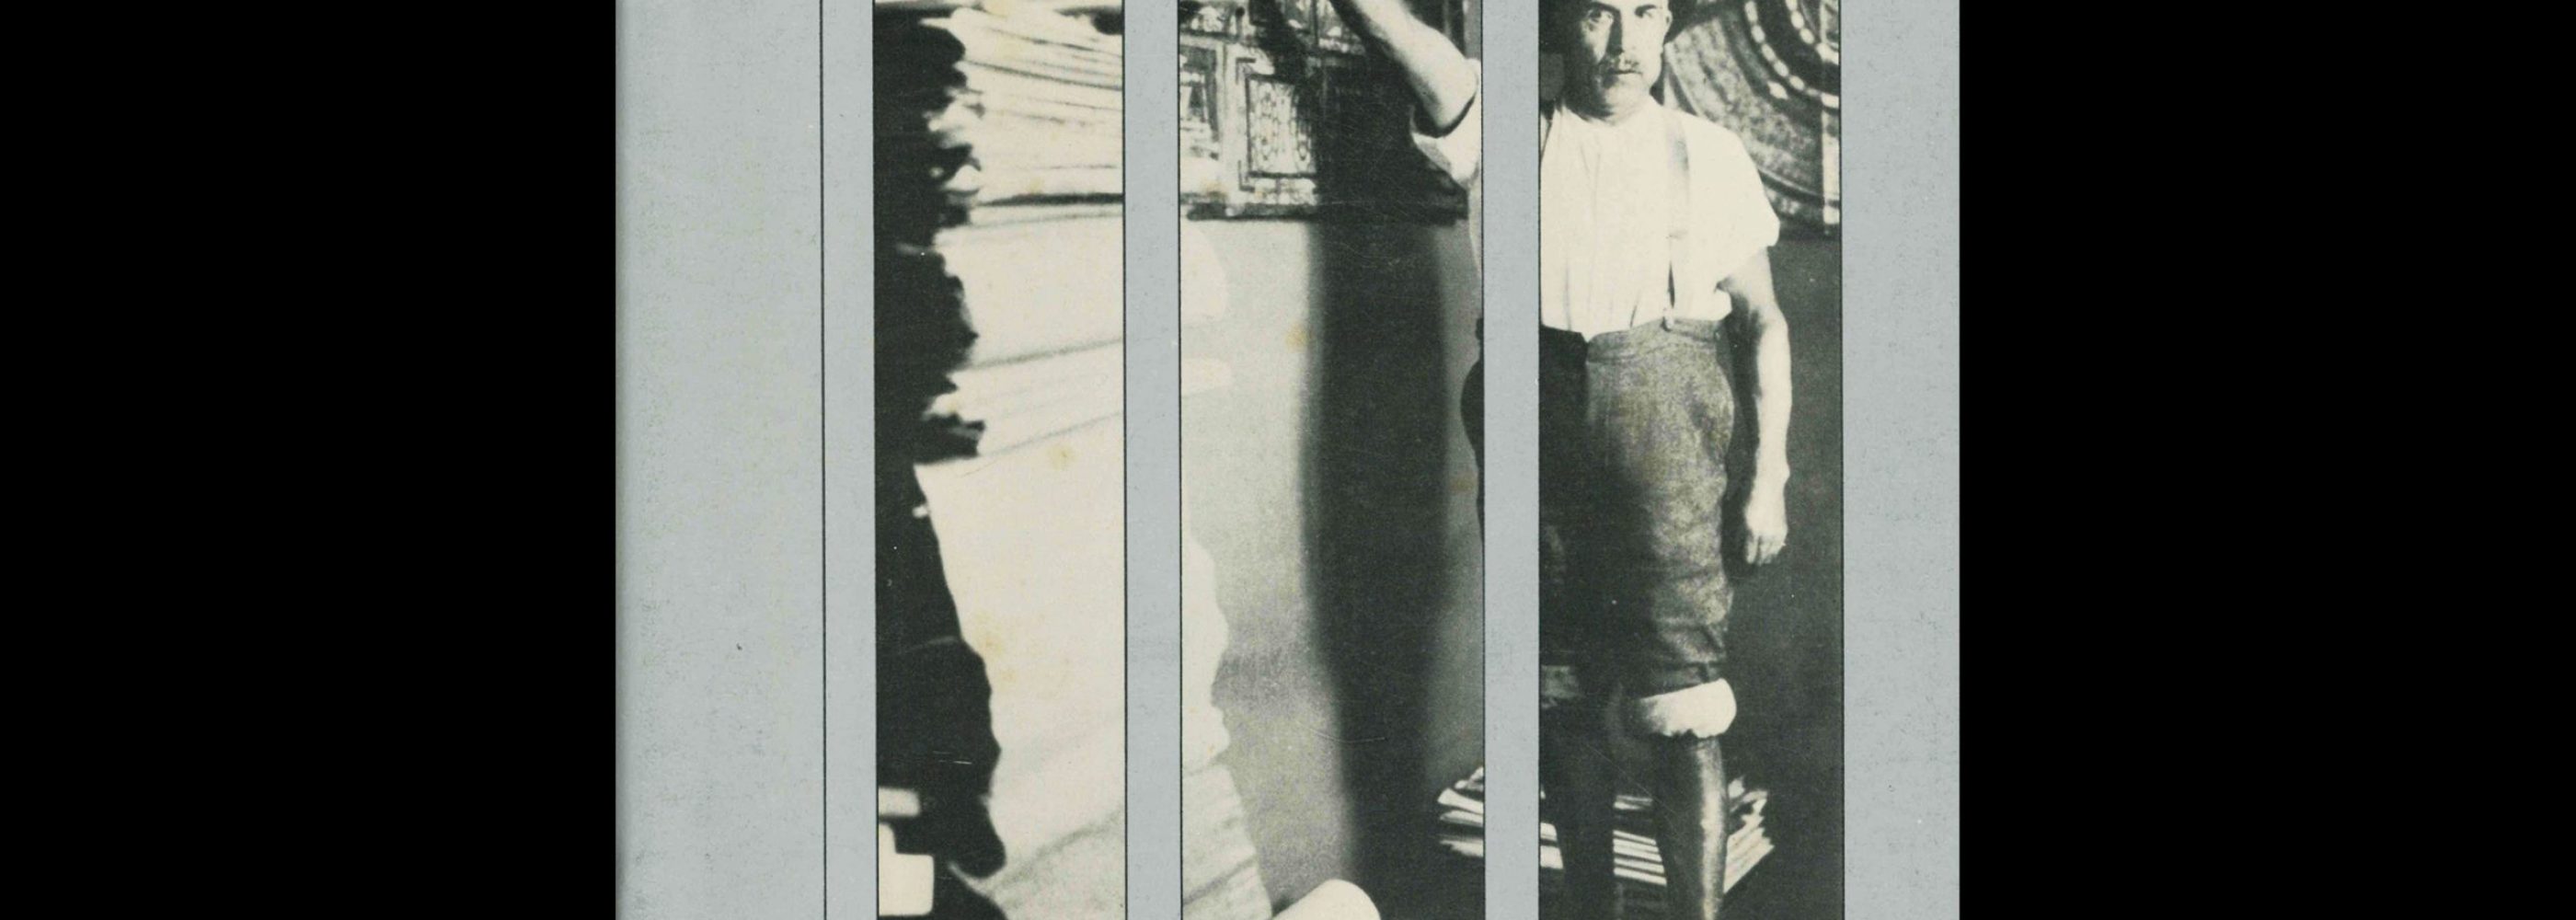 Museumjournaal, Serie 22 no2, 1977. Layout: Frans Evenhuis and Piet van Meiji | Cover: Swip Stolk